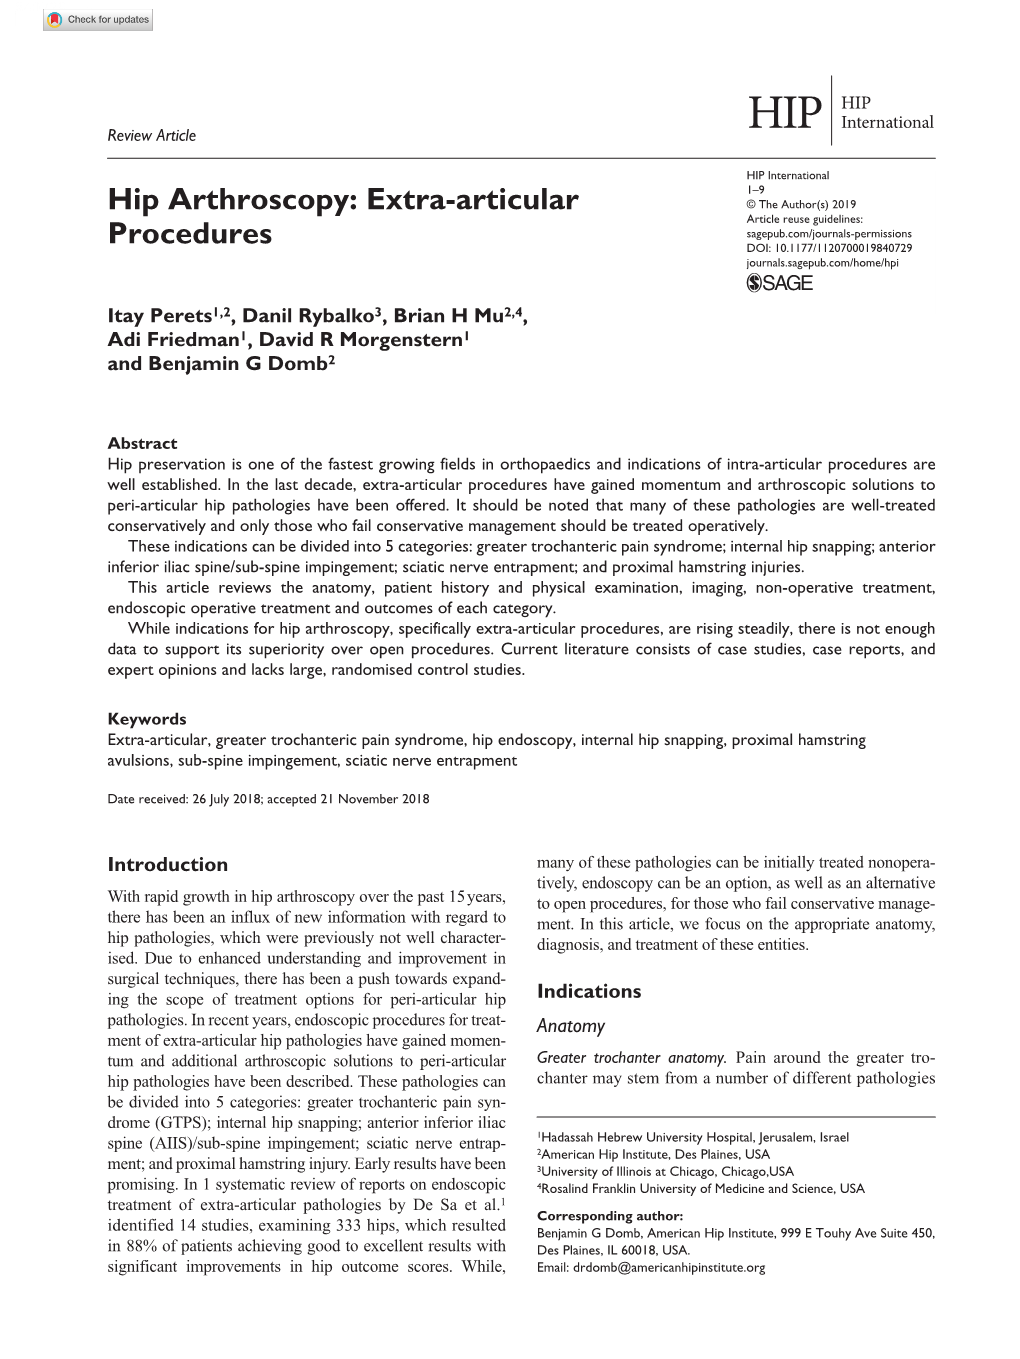 Hip Arthroscopy: Extra-Articular Procedures